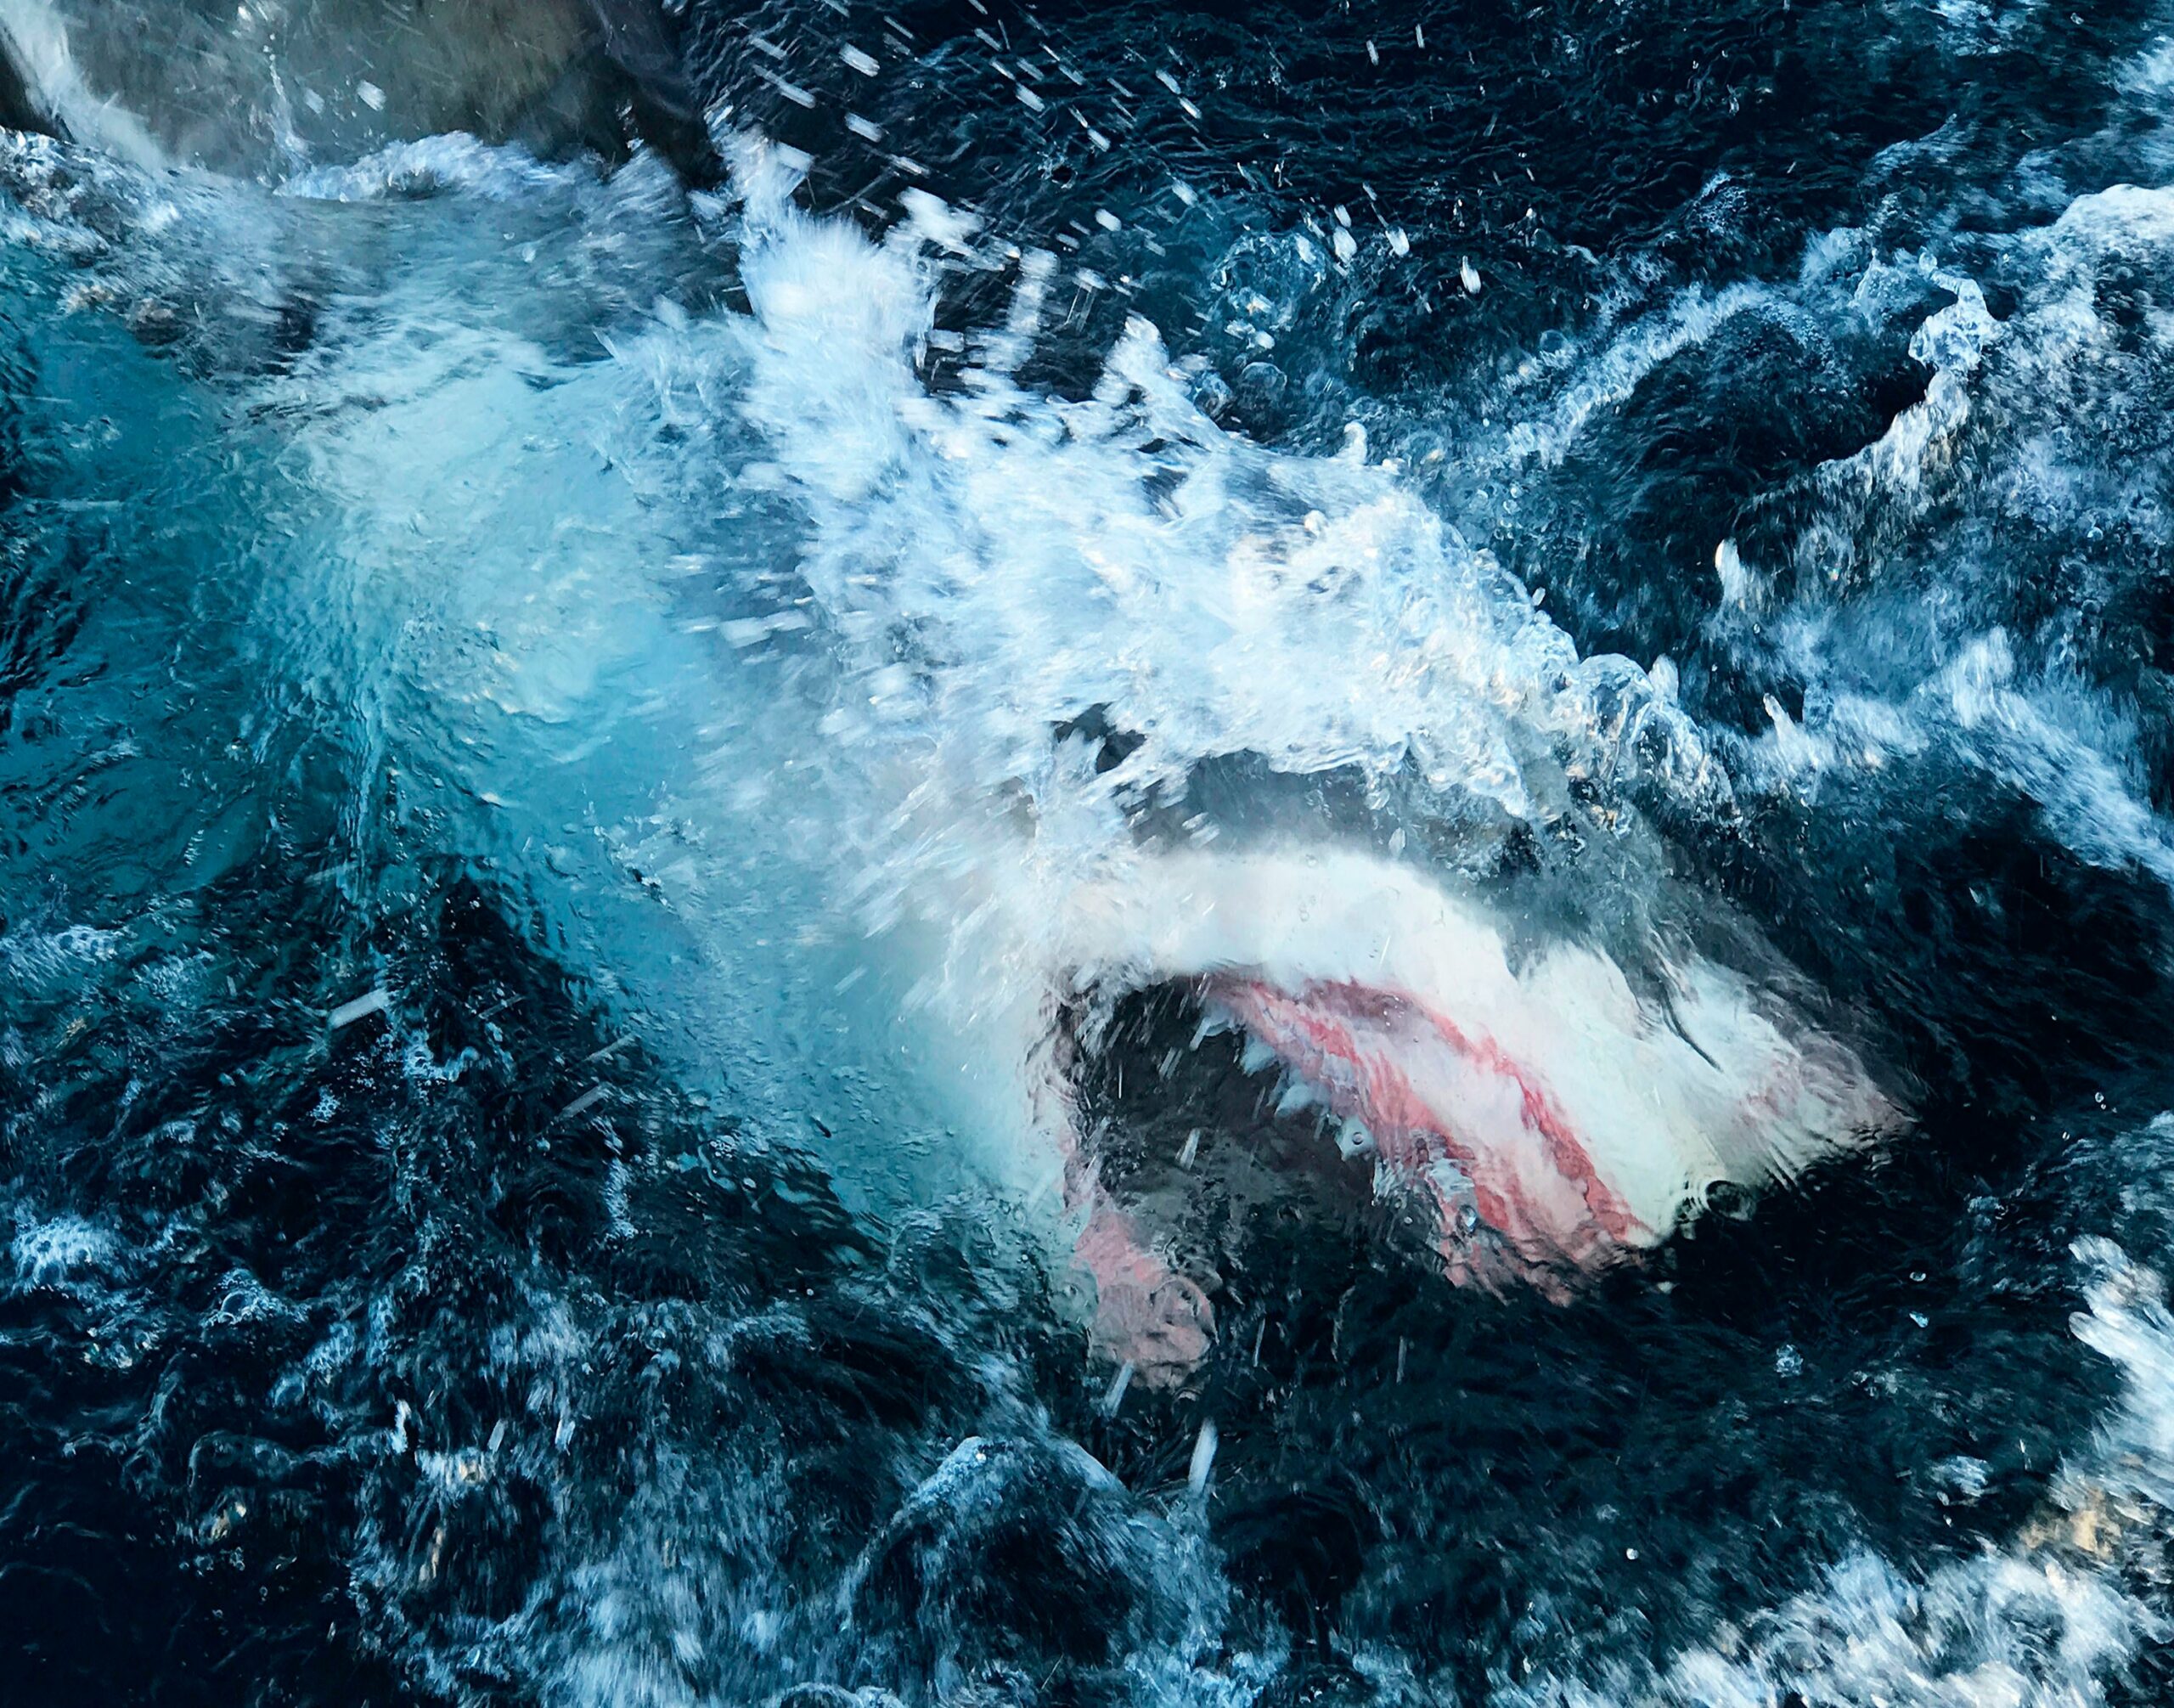 Shark bites South Carolina surfer’s face at popular Florida beach, officials say